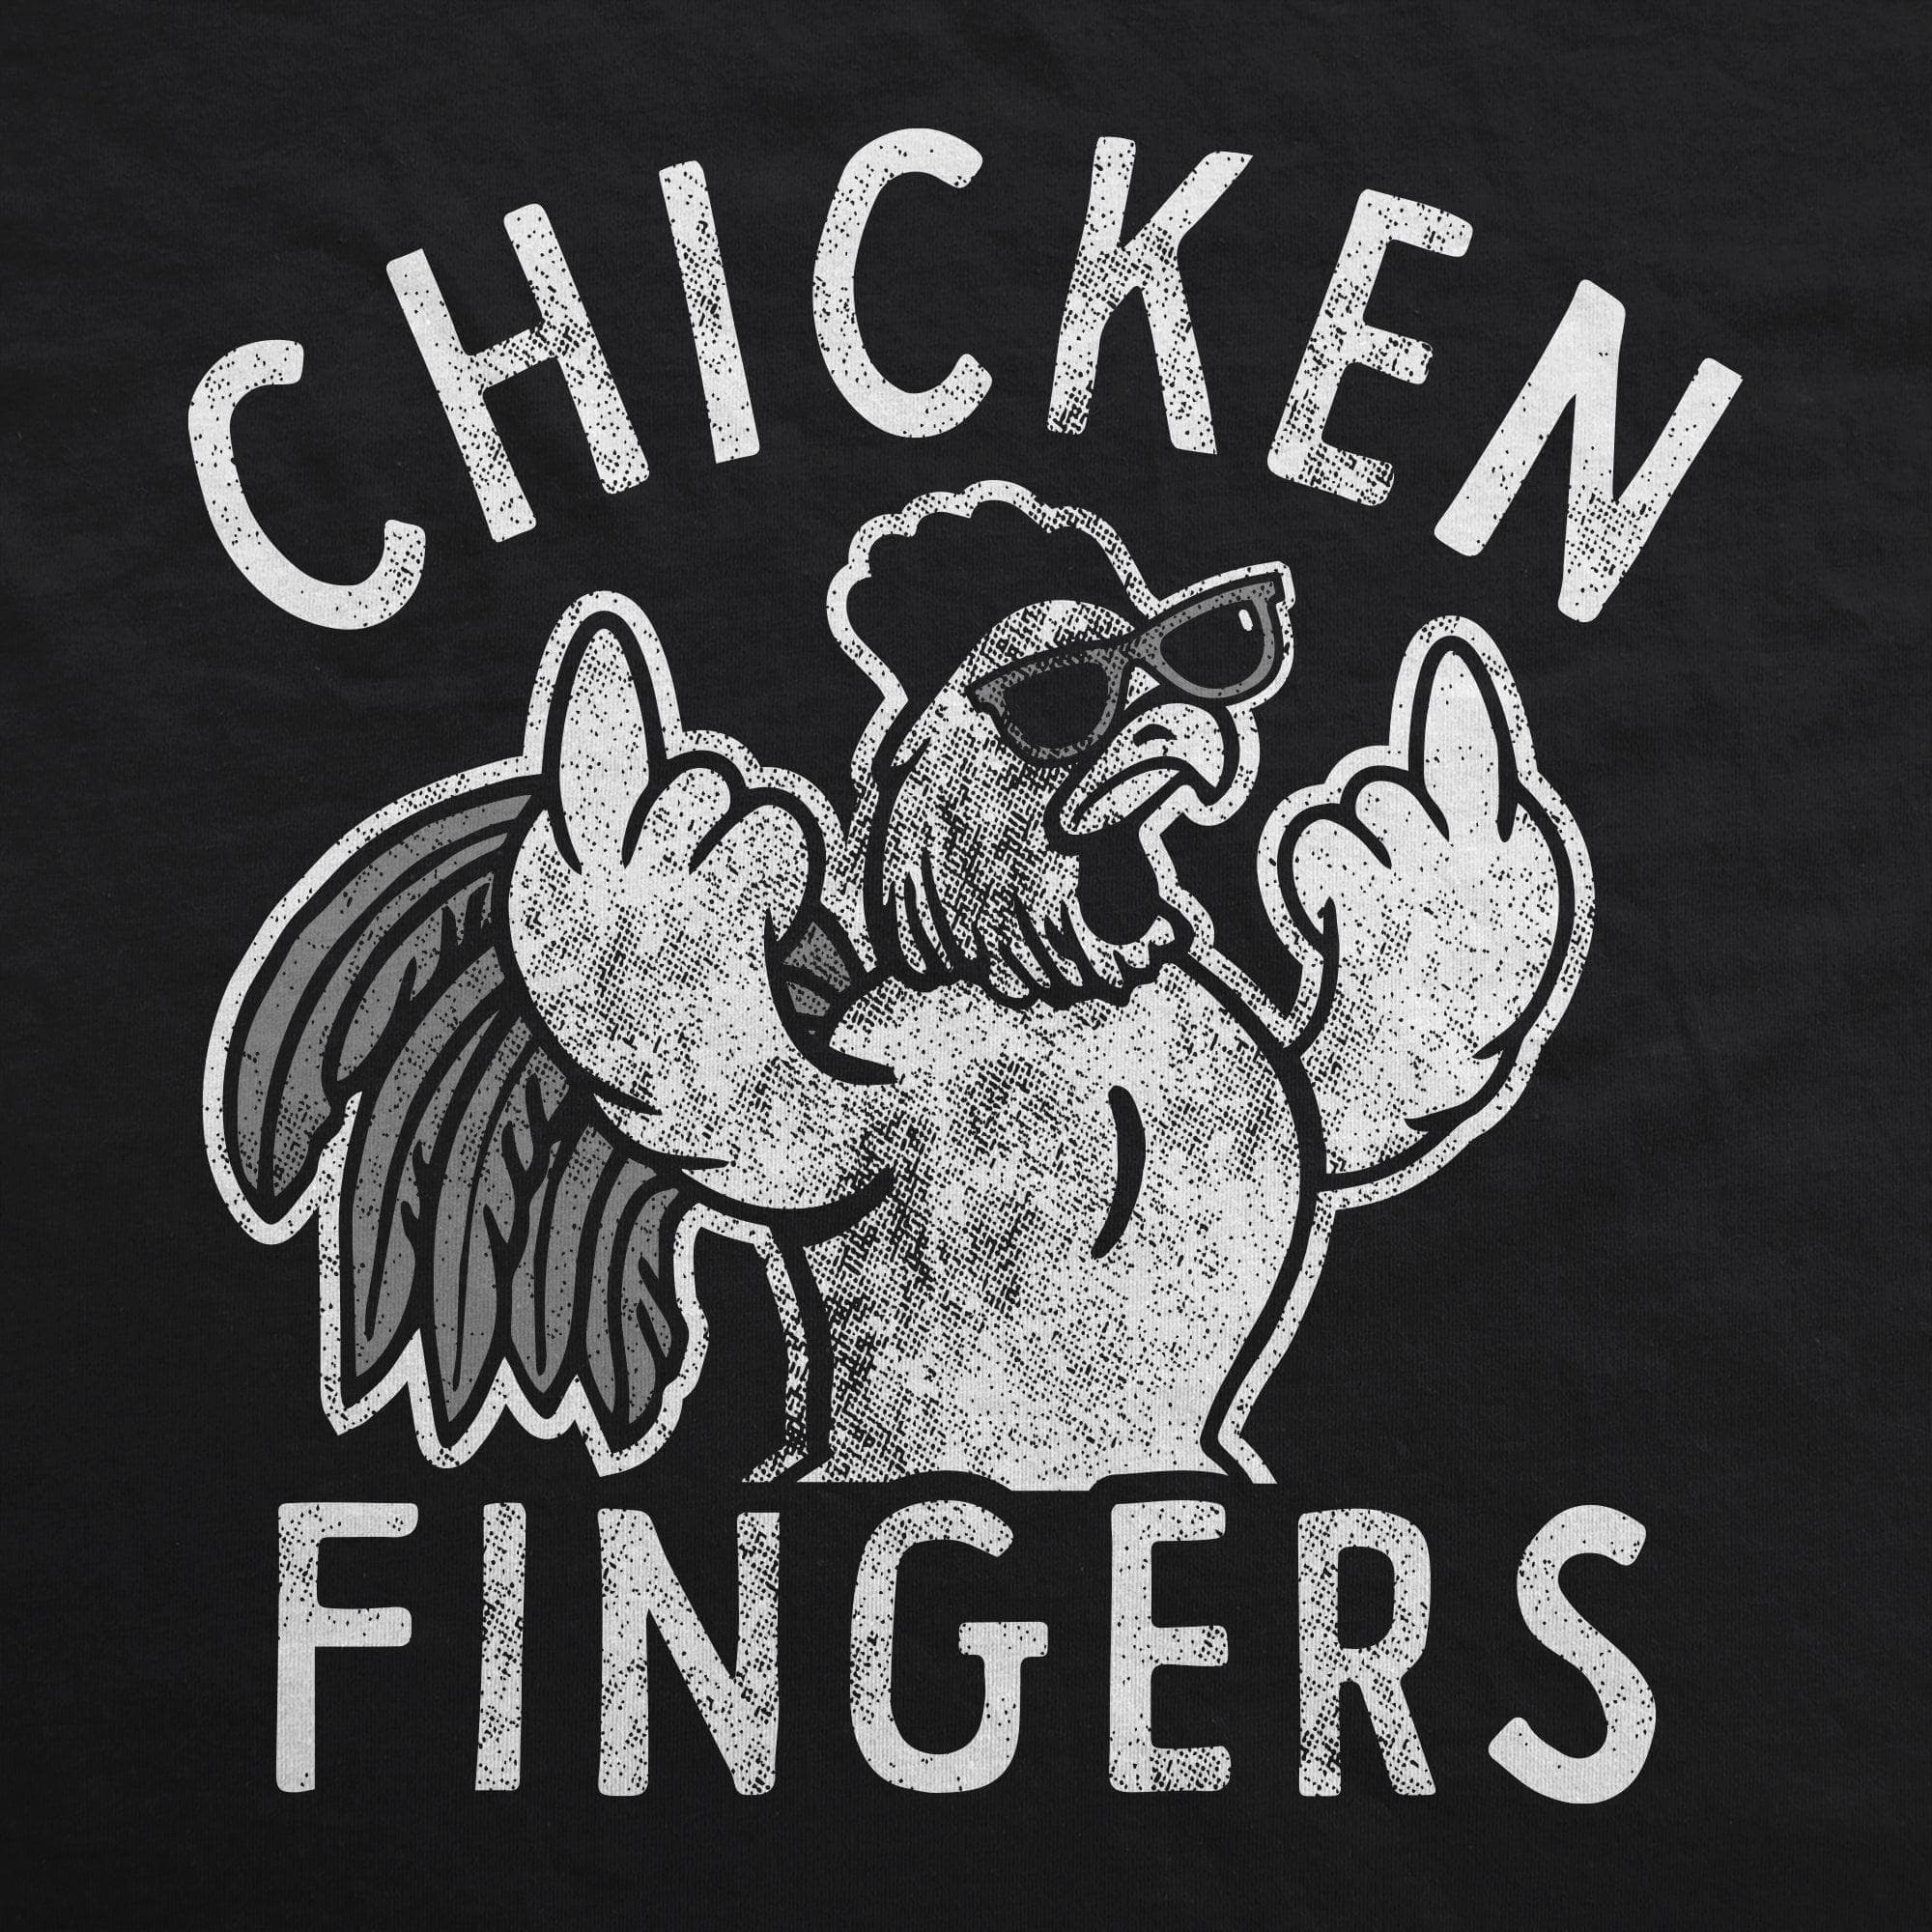 Chicken Fingers Hoodie  -  Crazy Dog T-Shirts